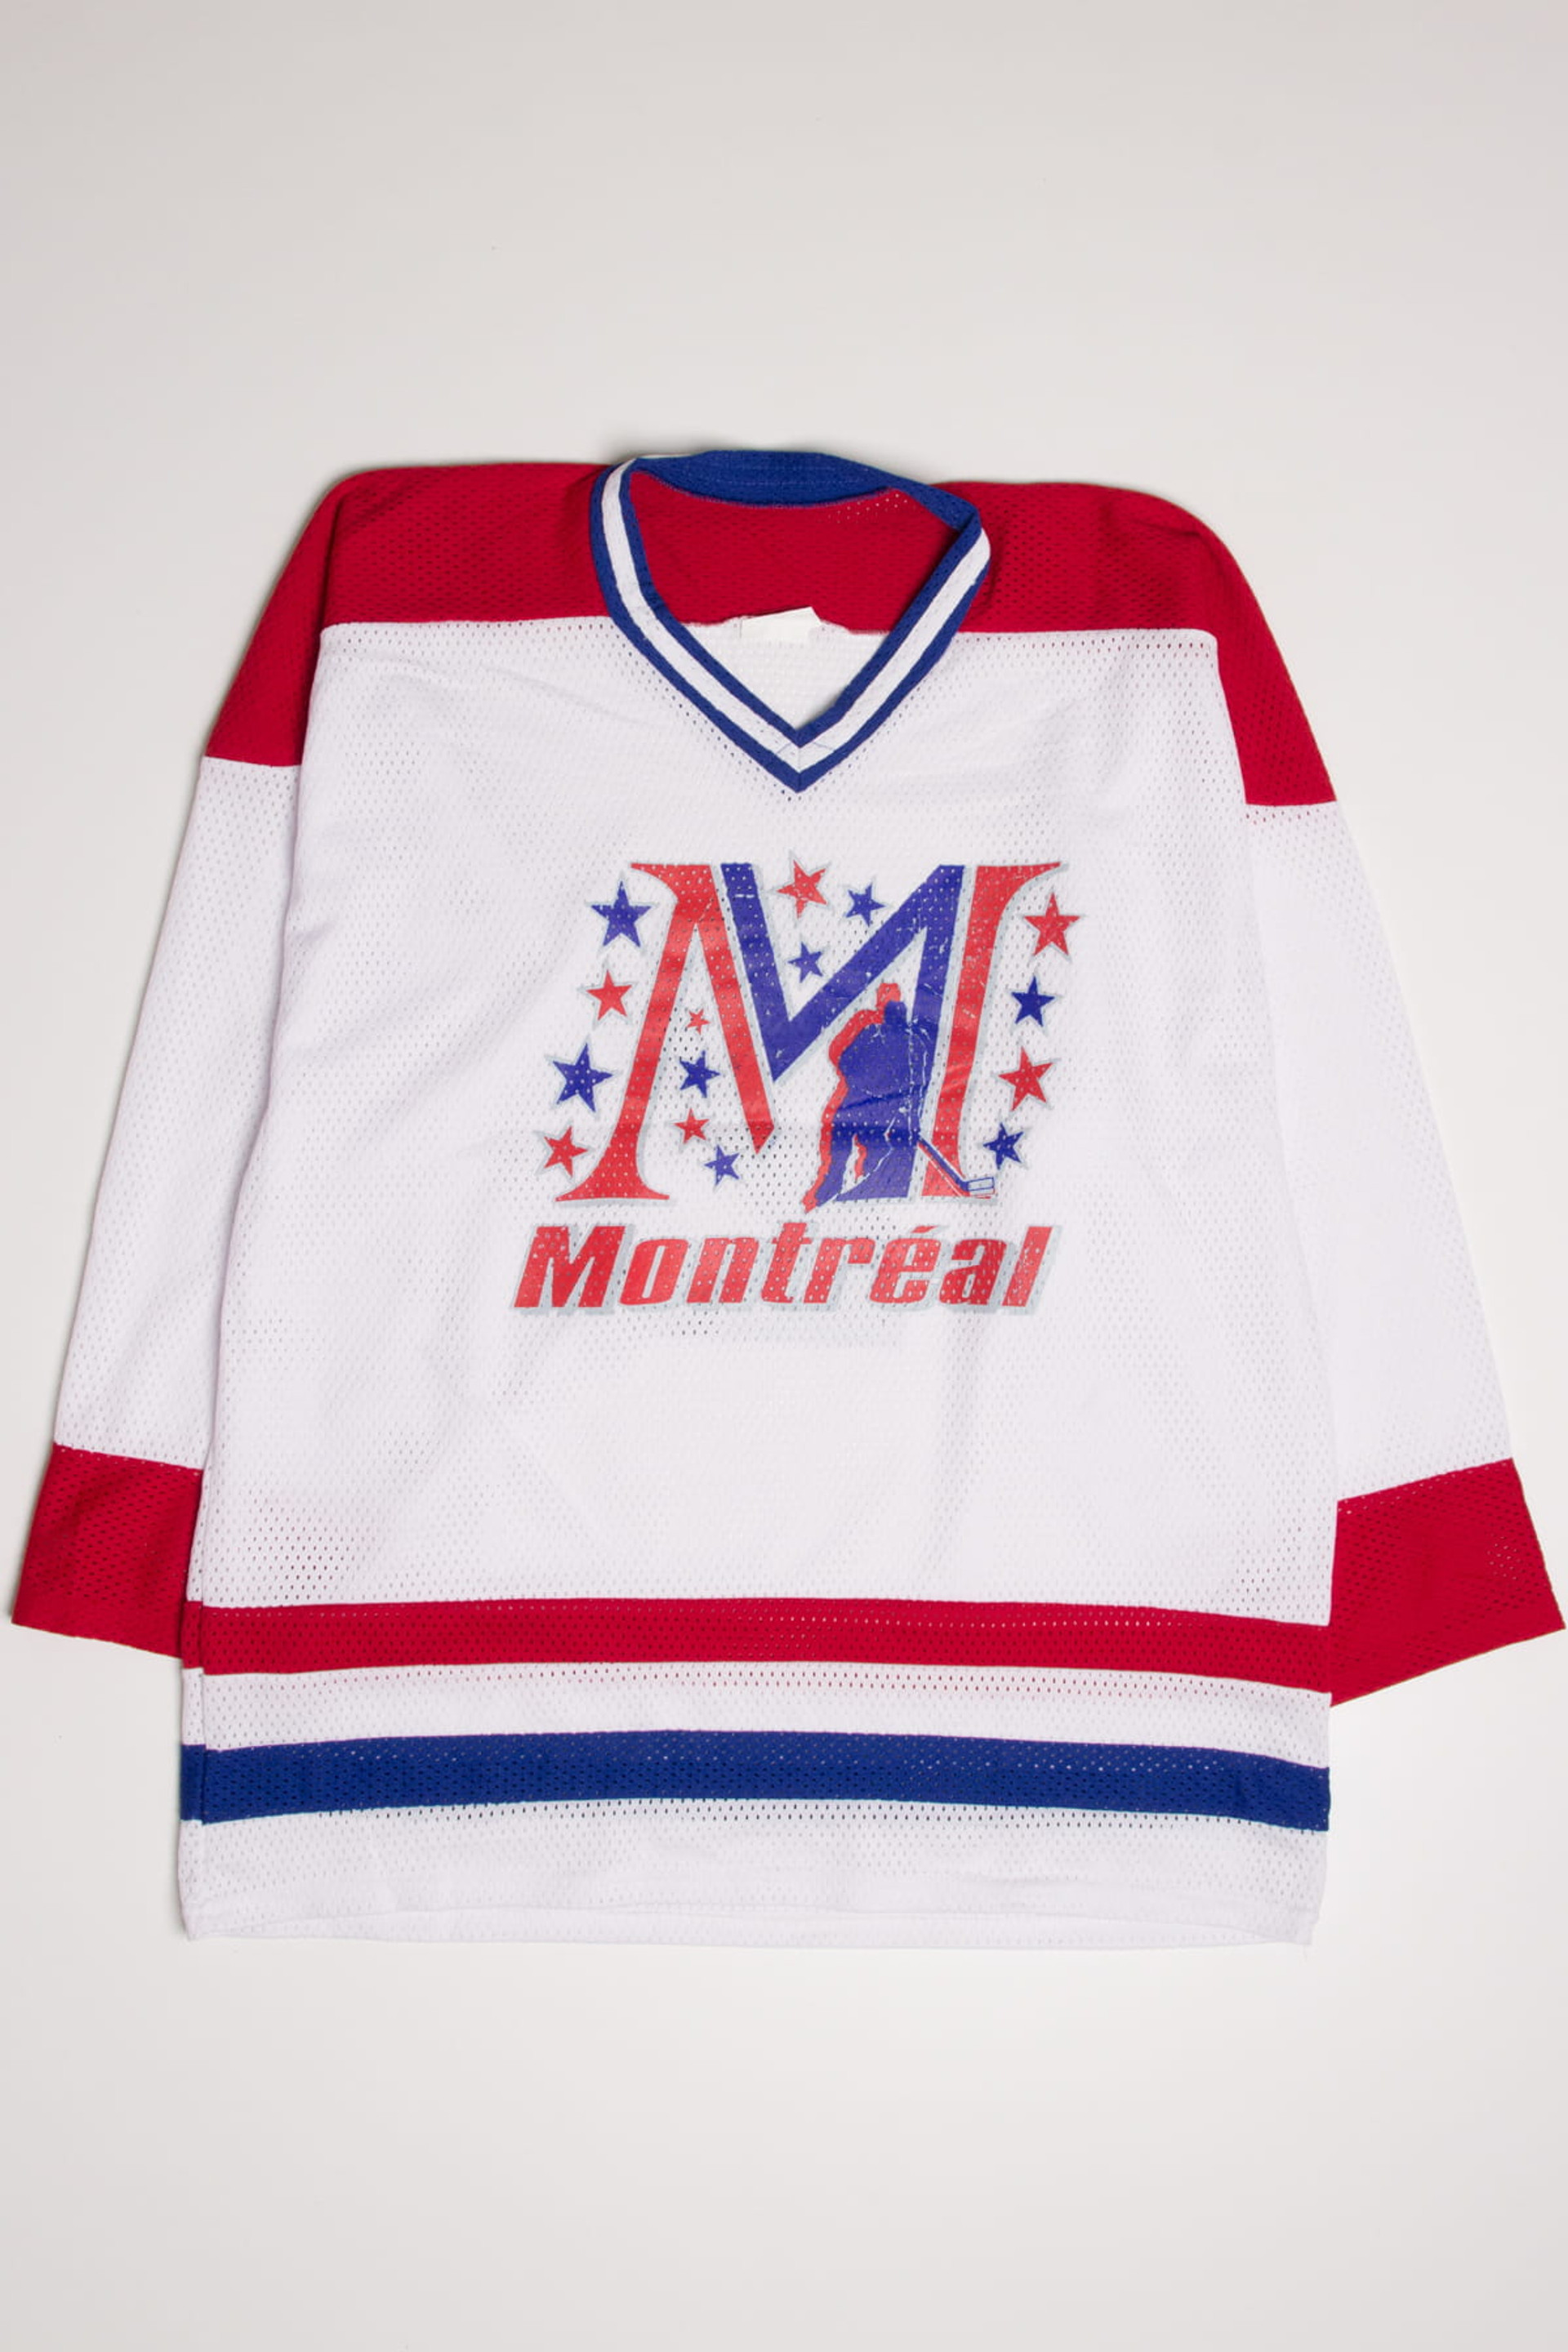 Vintage Montreal Canadiens Hockey Jersey - Ragstock.com